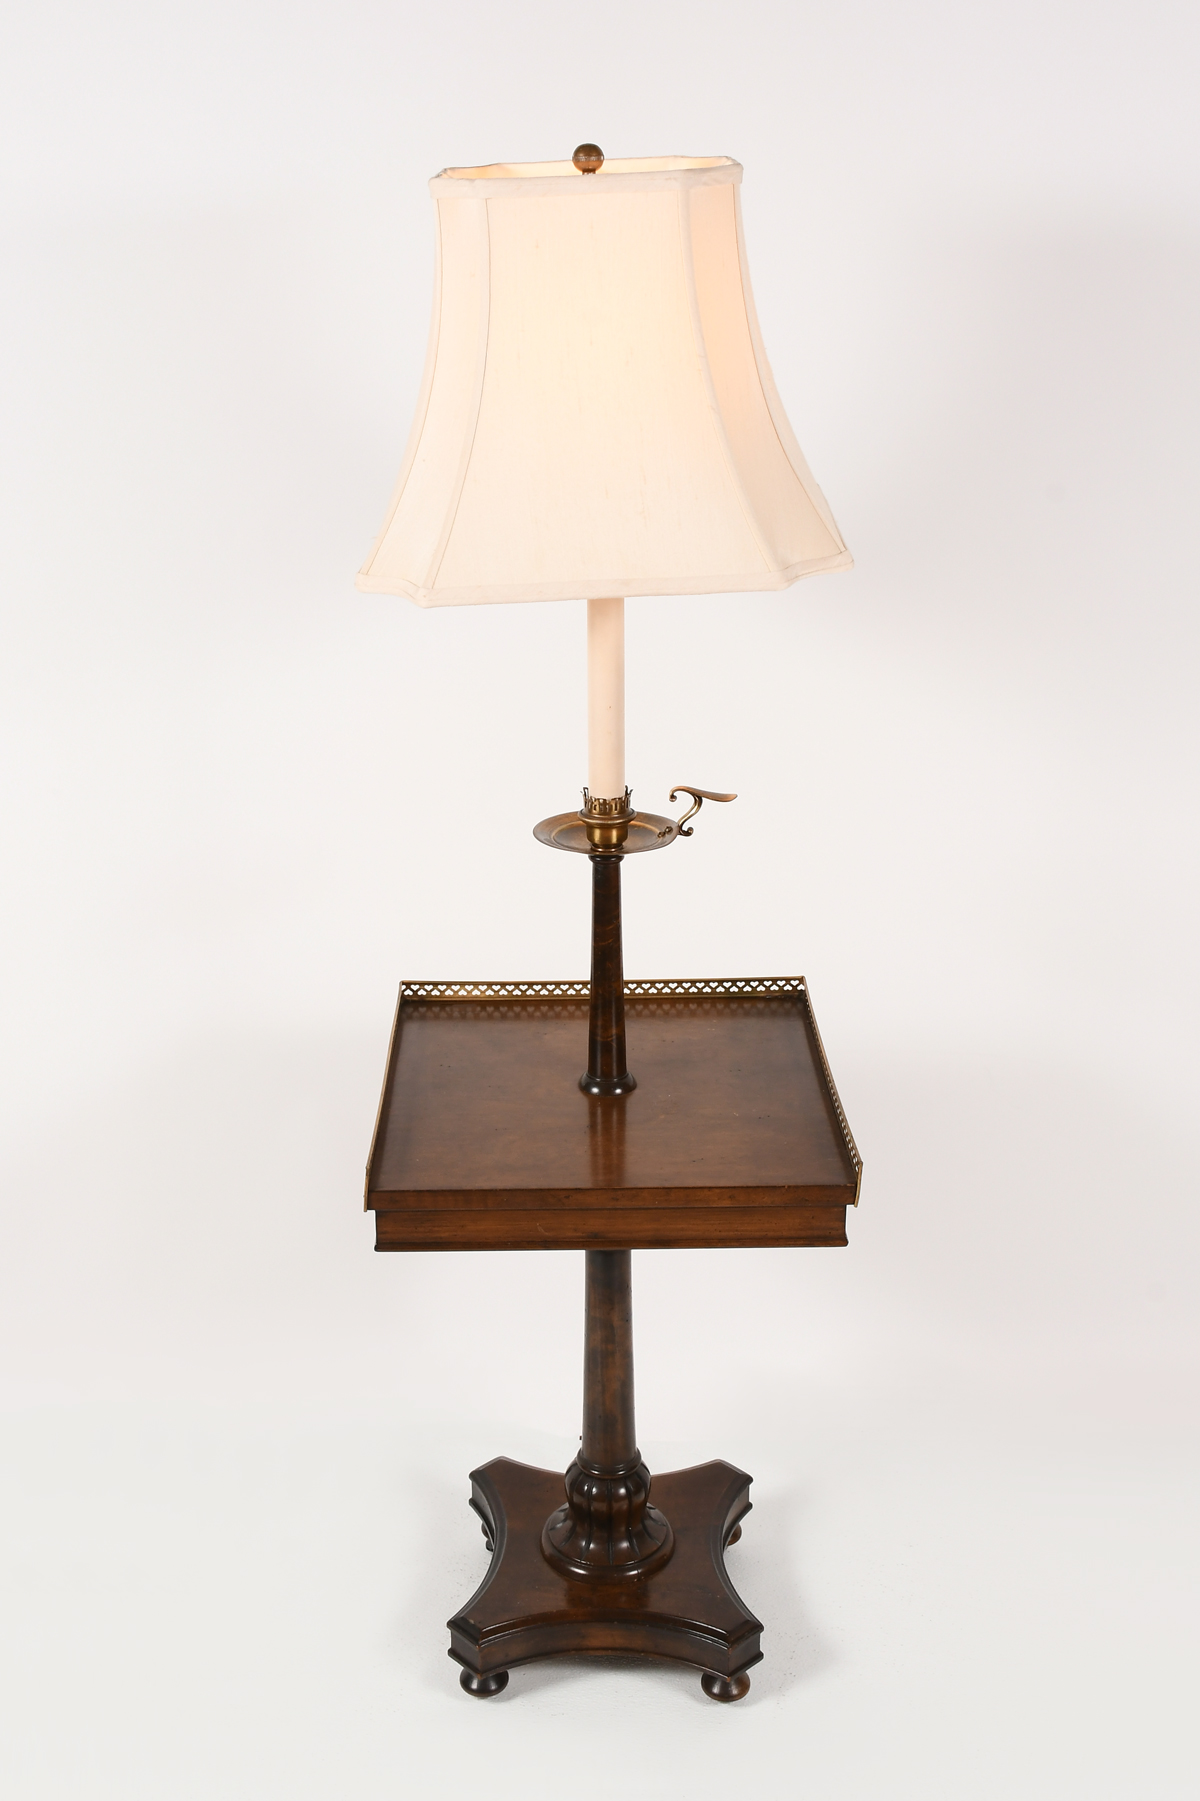 FREDERICK COOPER LAMP/TABLE: Pedestal